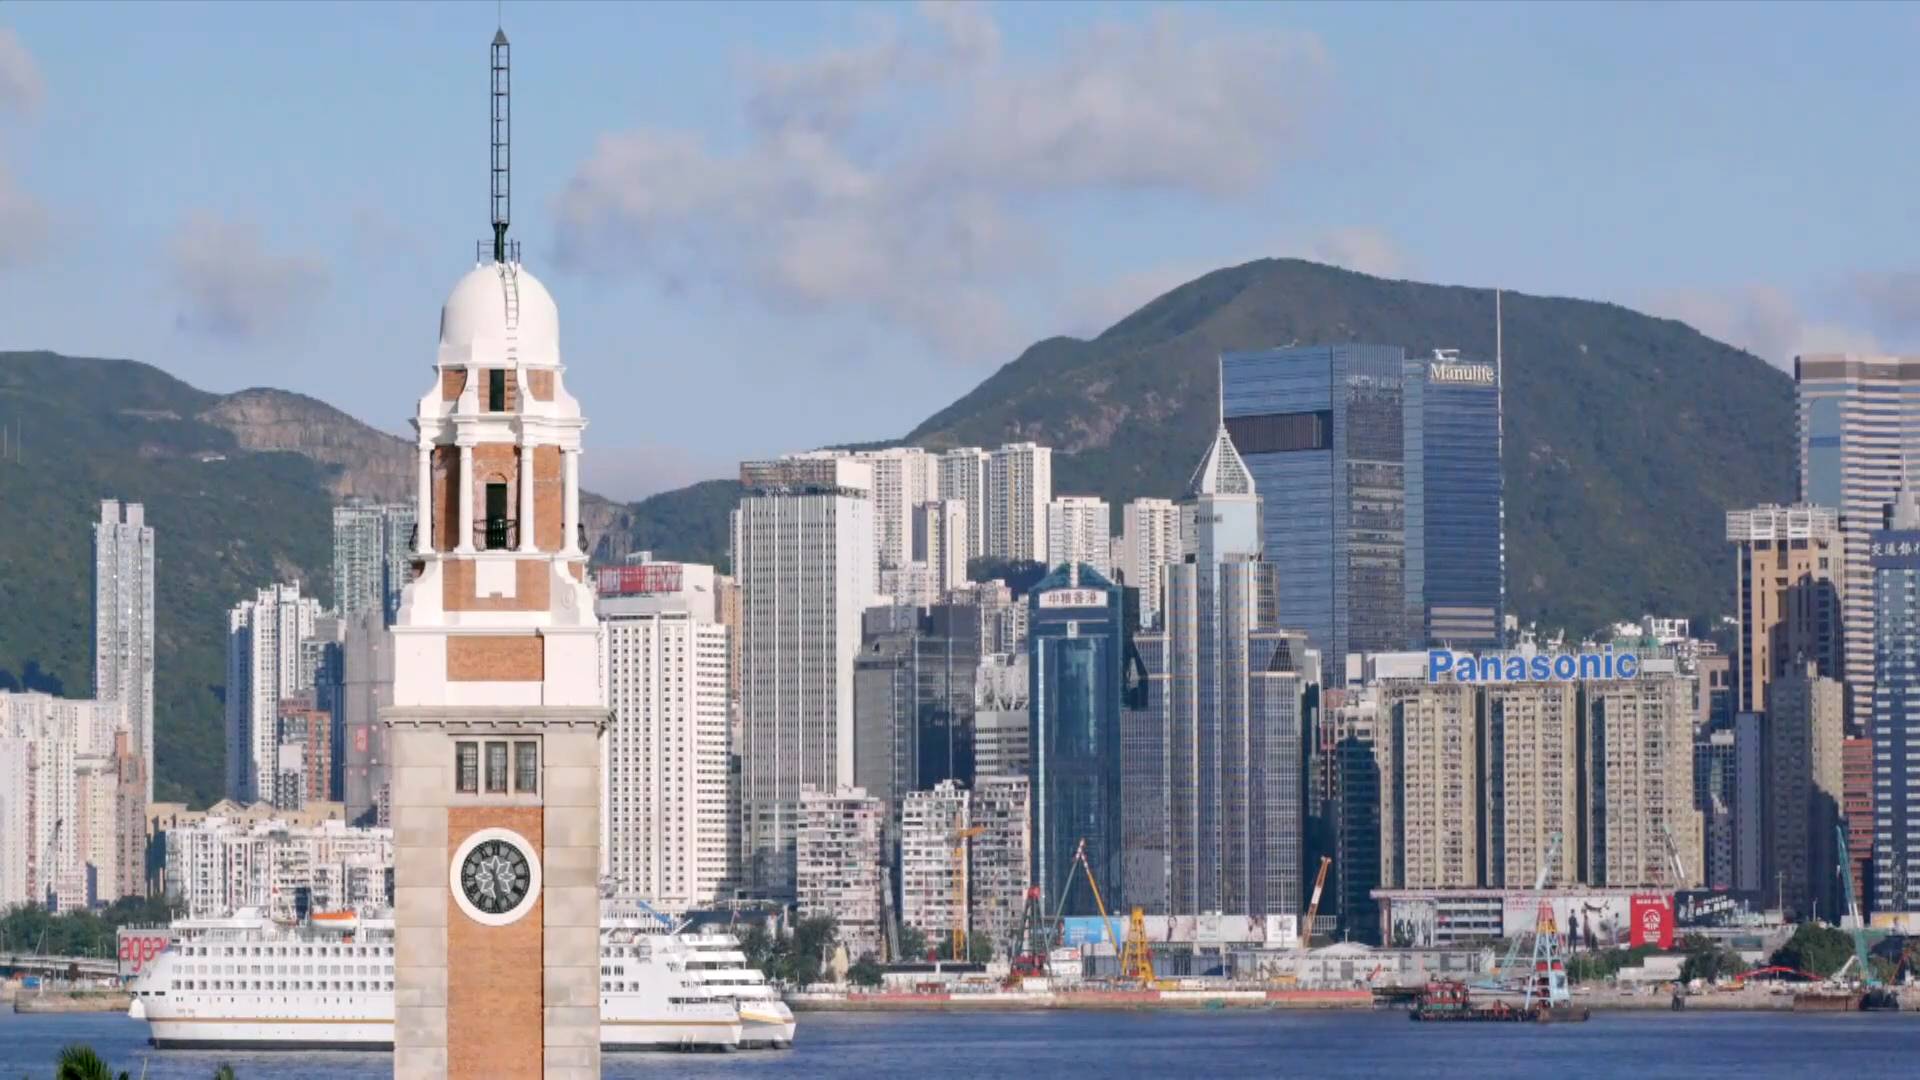 GLOBALink | HKSAR's LegCo election well interprets "patriots administering Hong Kong": HK scholar